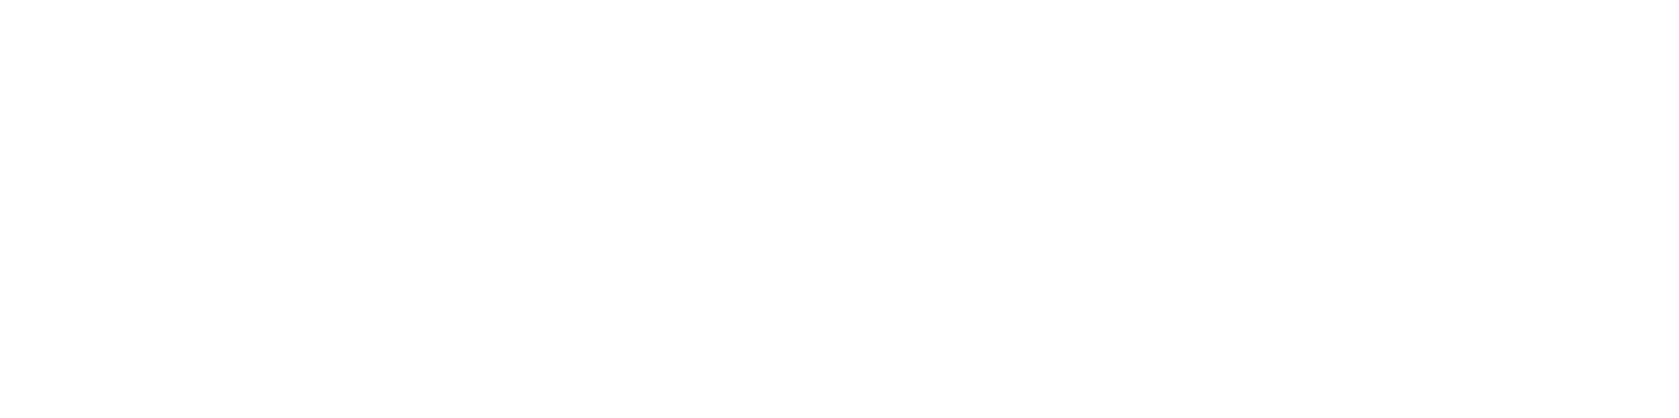 Simulator Logo - Job Simulator Logos